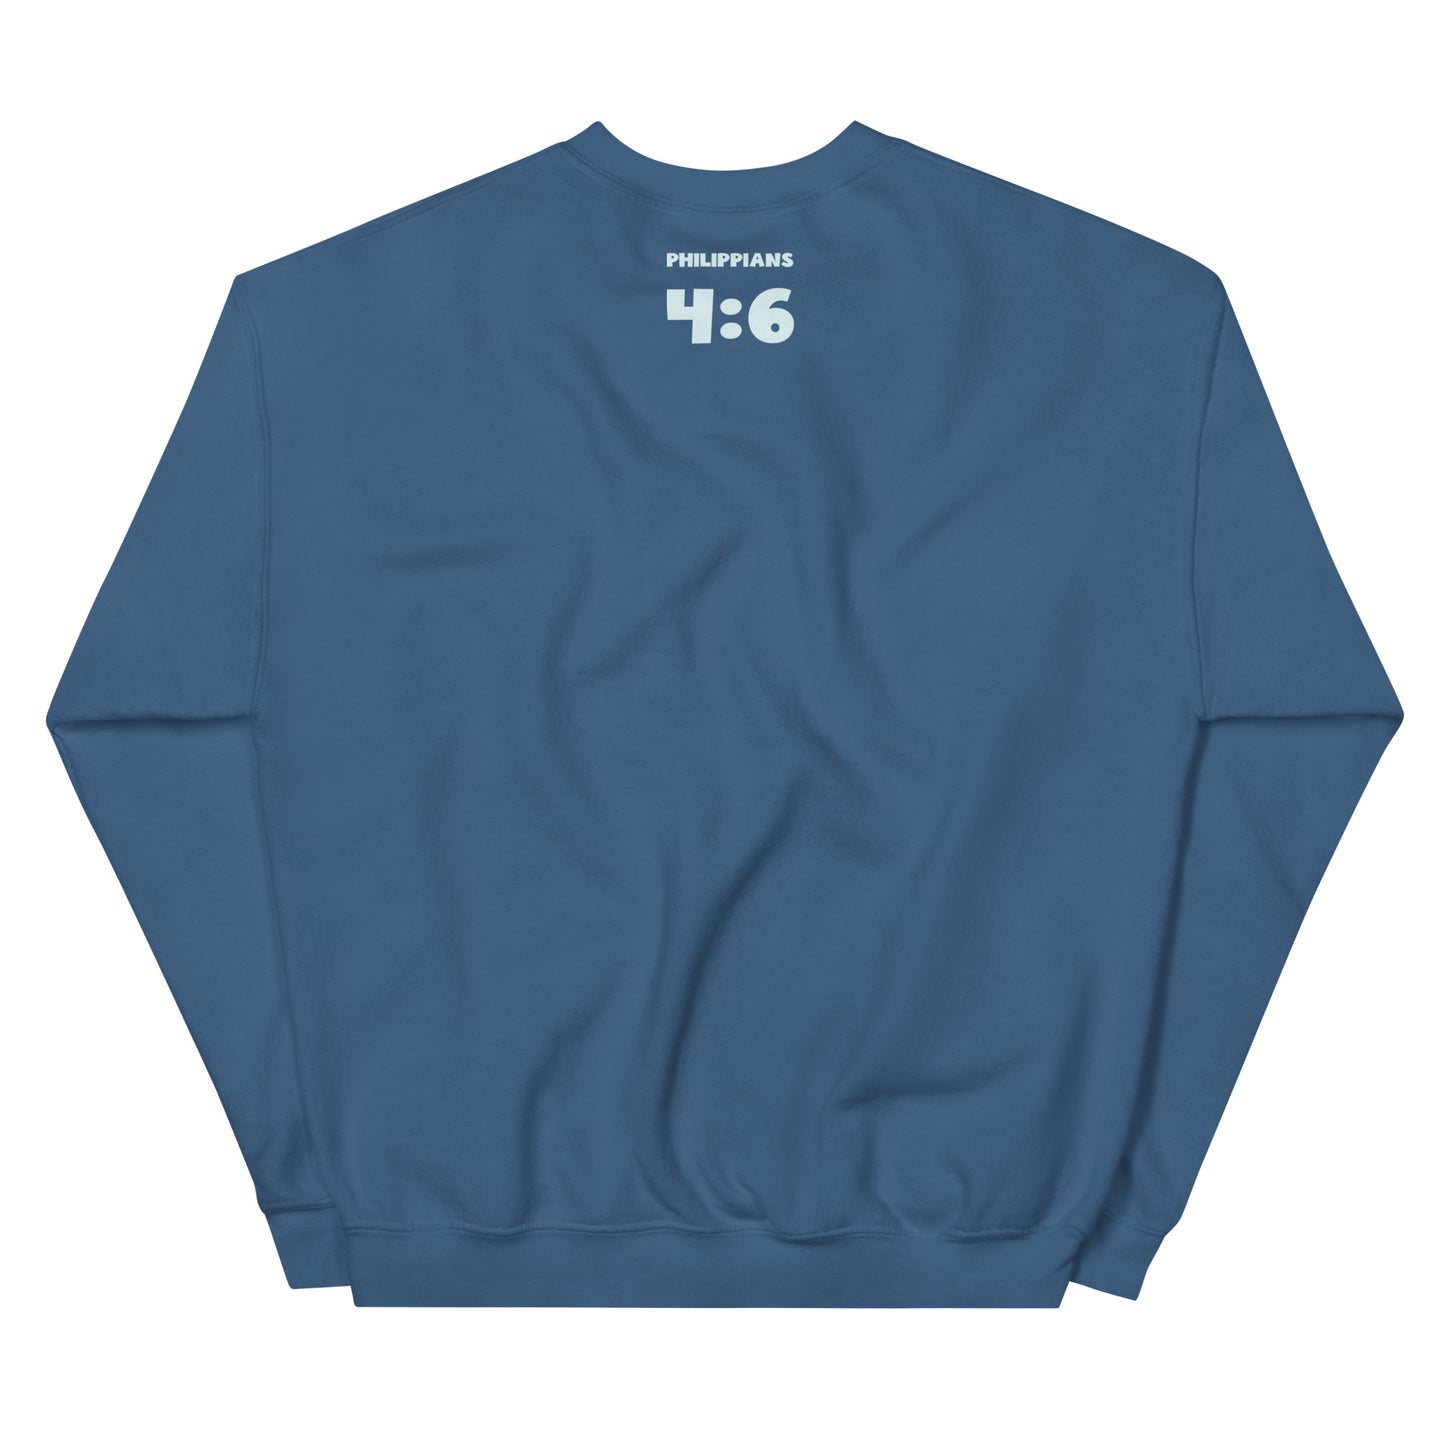 Be Prayin Sweatshirt- Indigo Blue